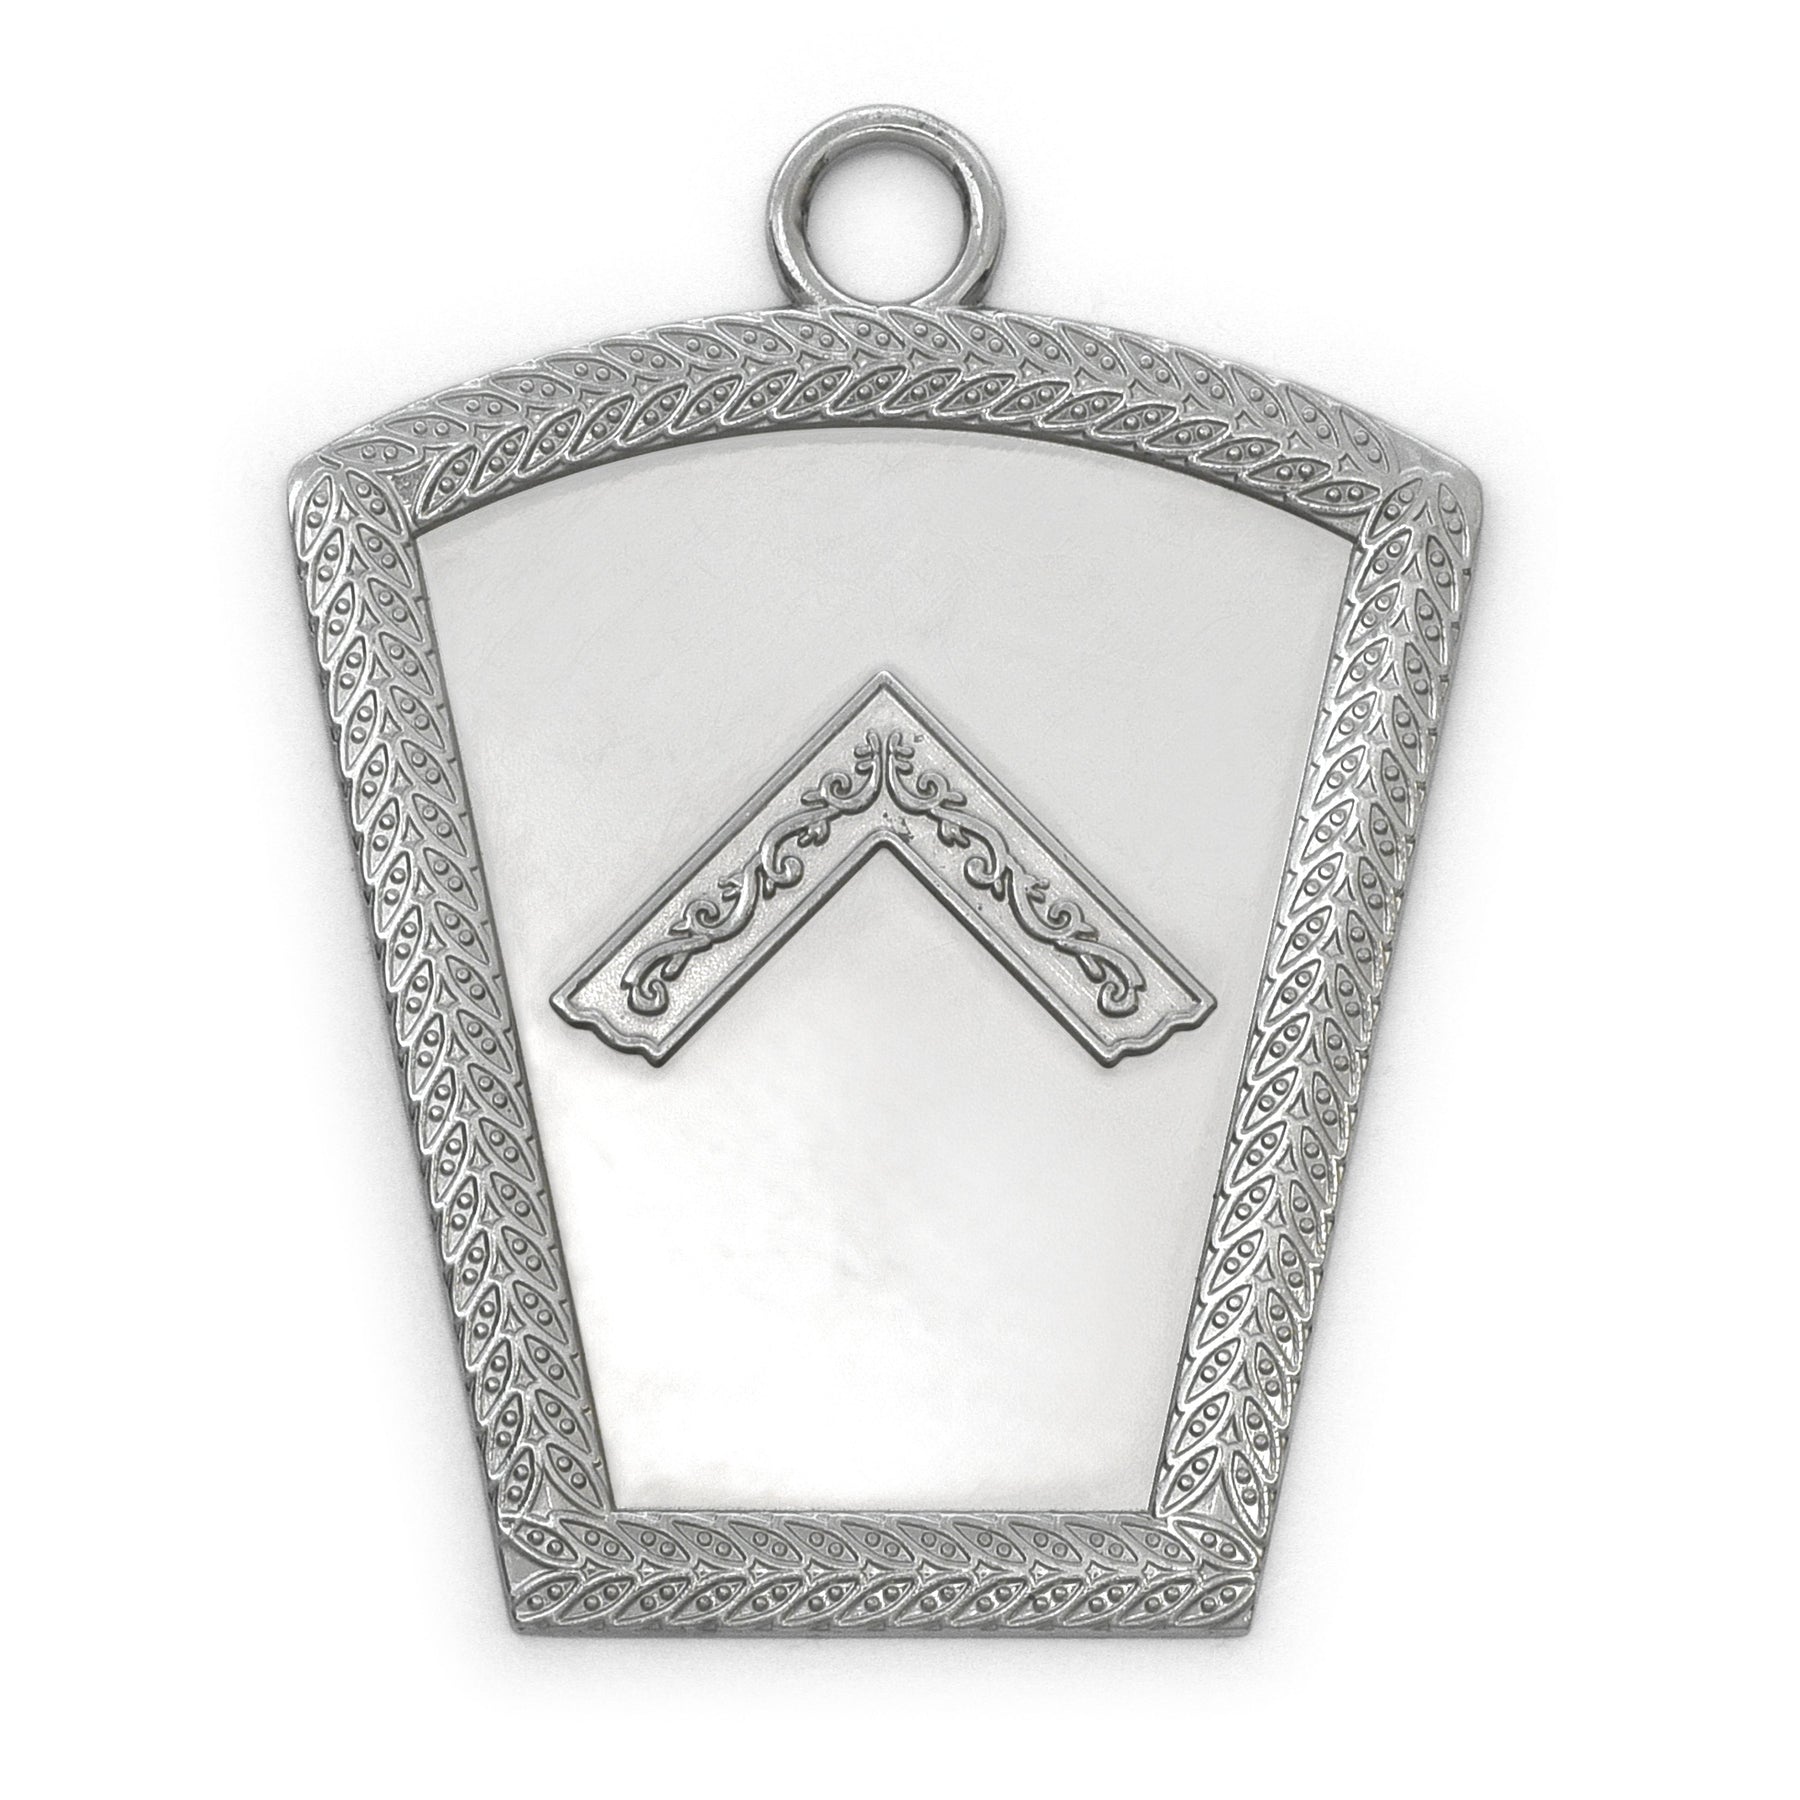 Worshipful Master Mark English Regulation Officer Collar Jewel - Silver Plated - Bricks Masons